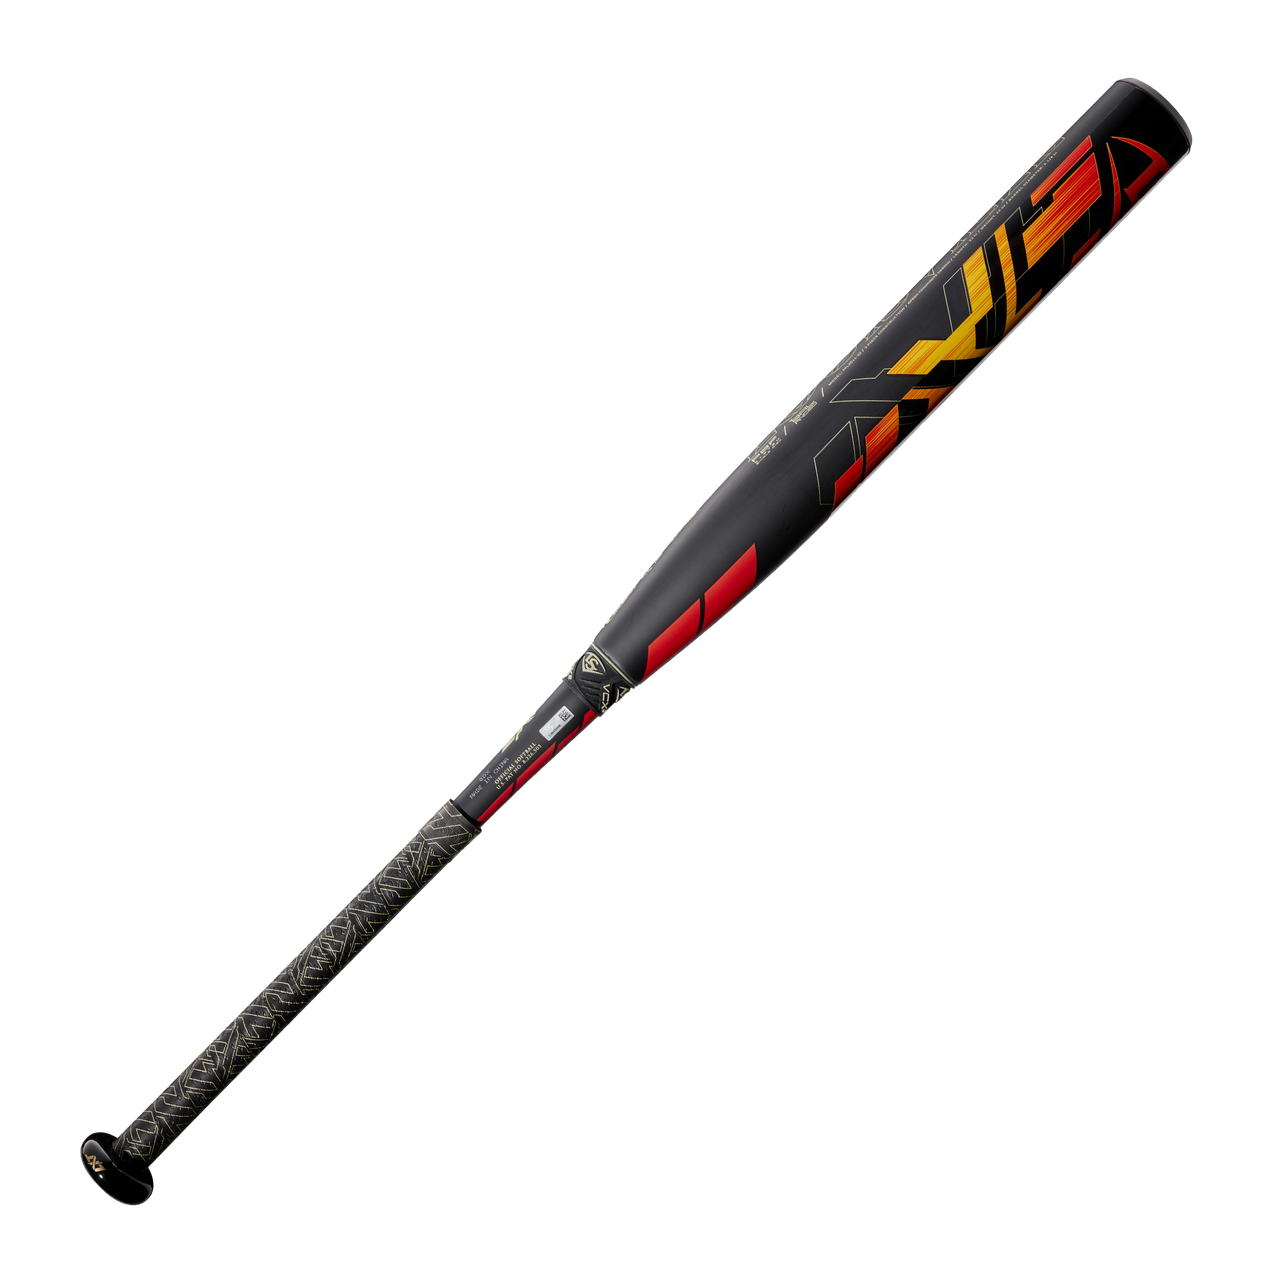 2022 Louisville Slugger LXT (-9) Fastpitch Bat Bat Club USA